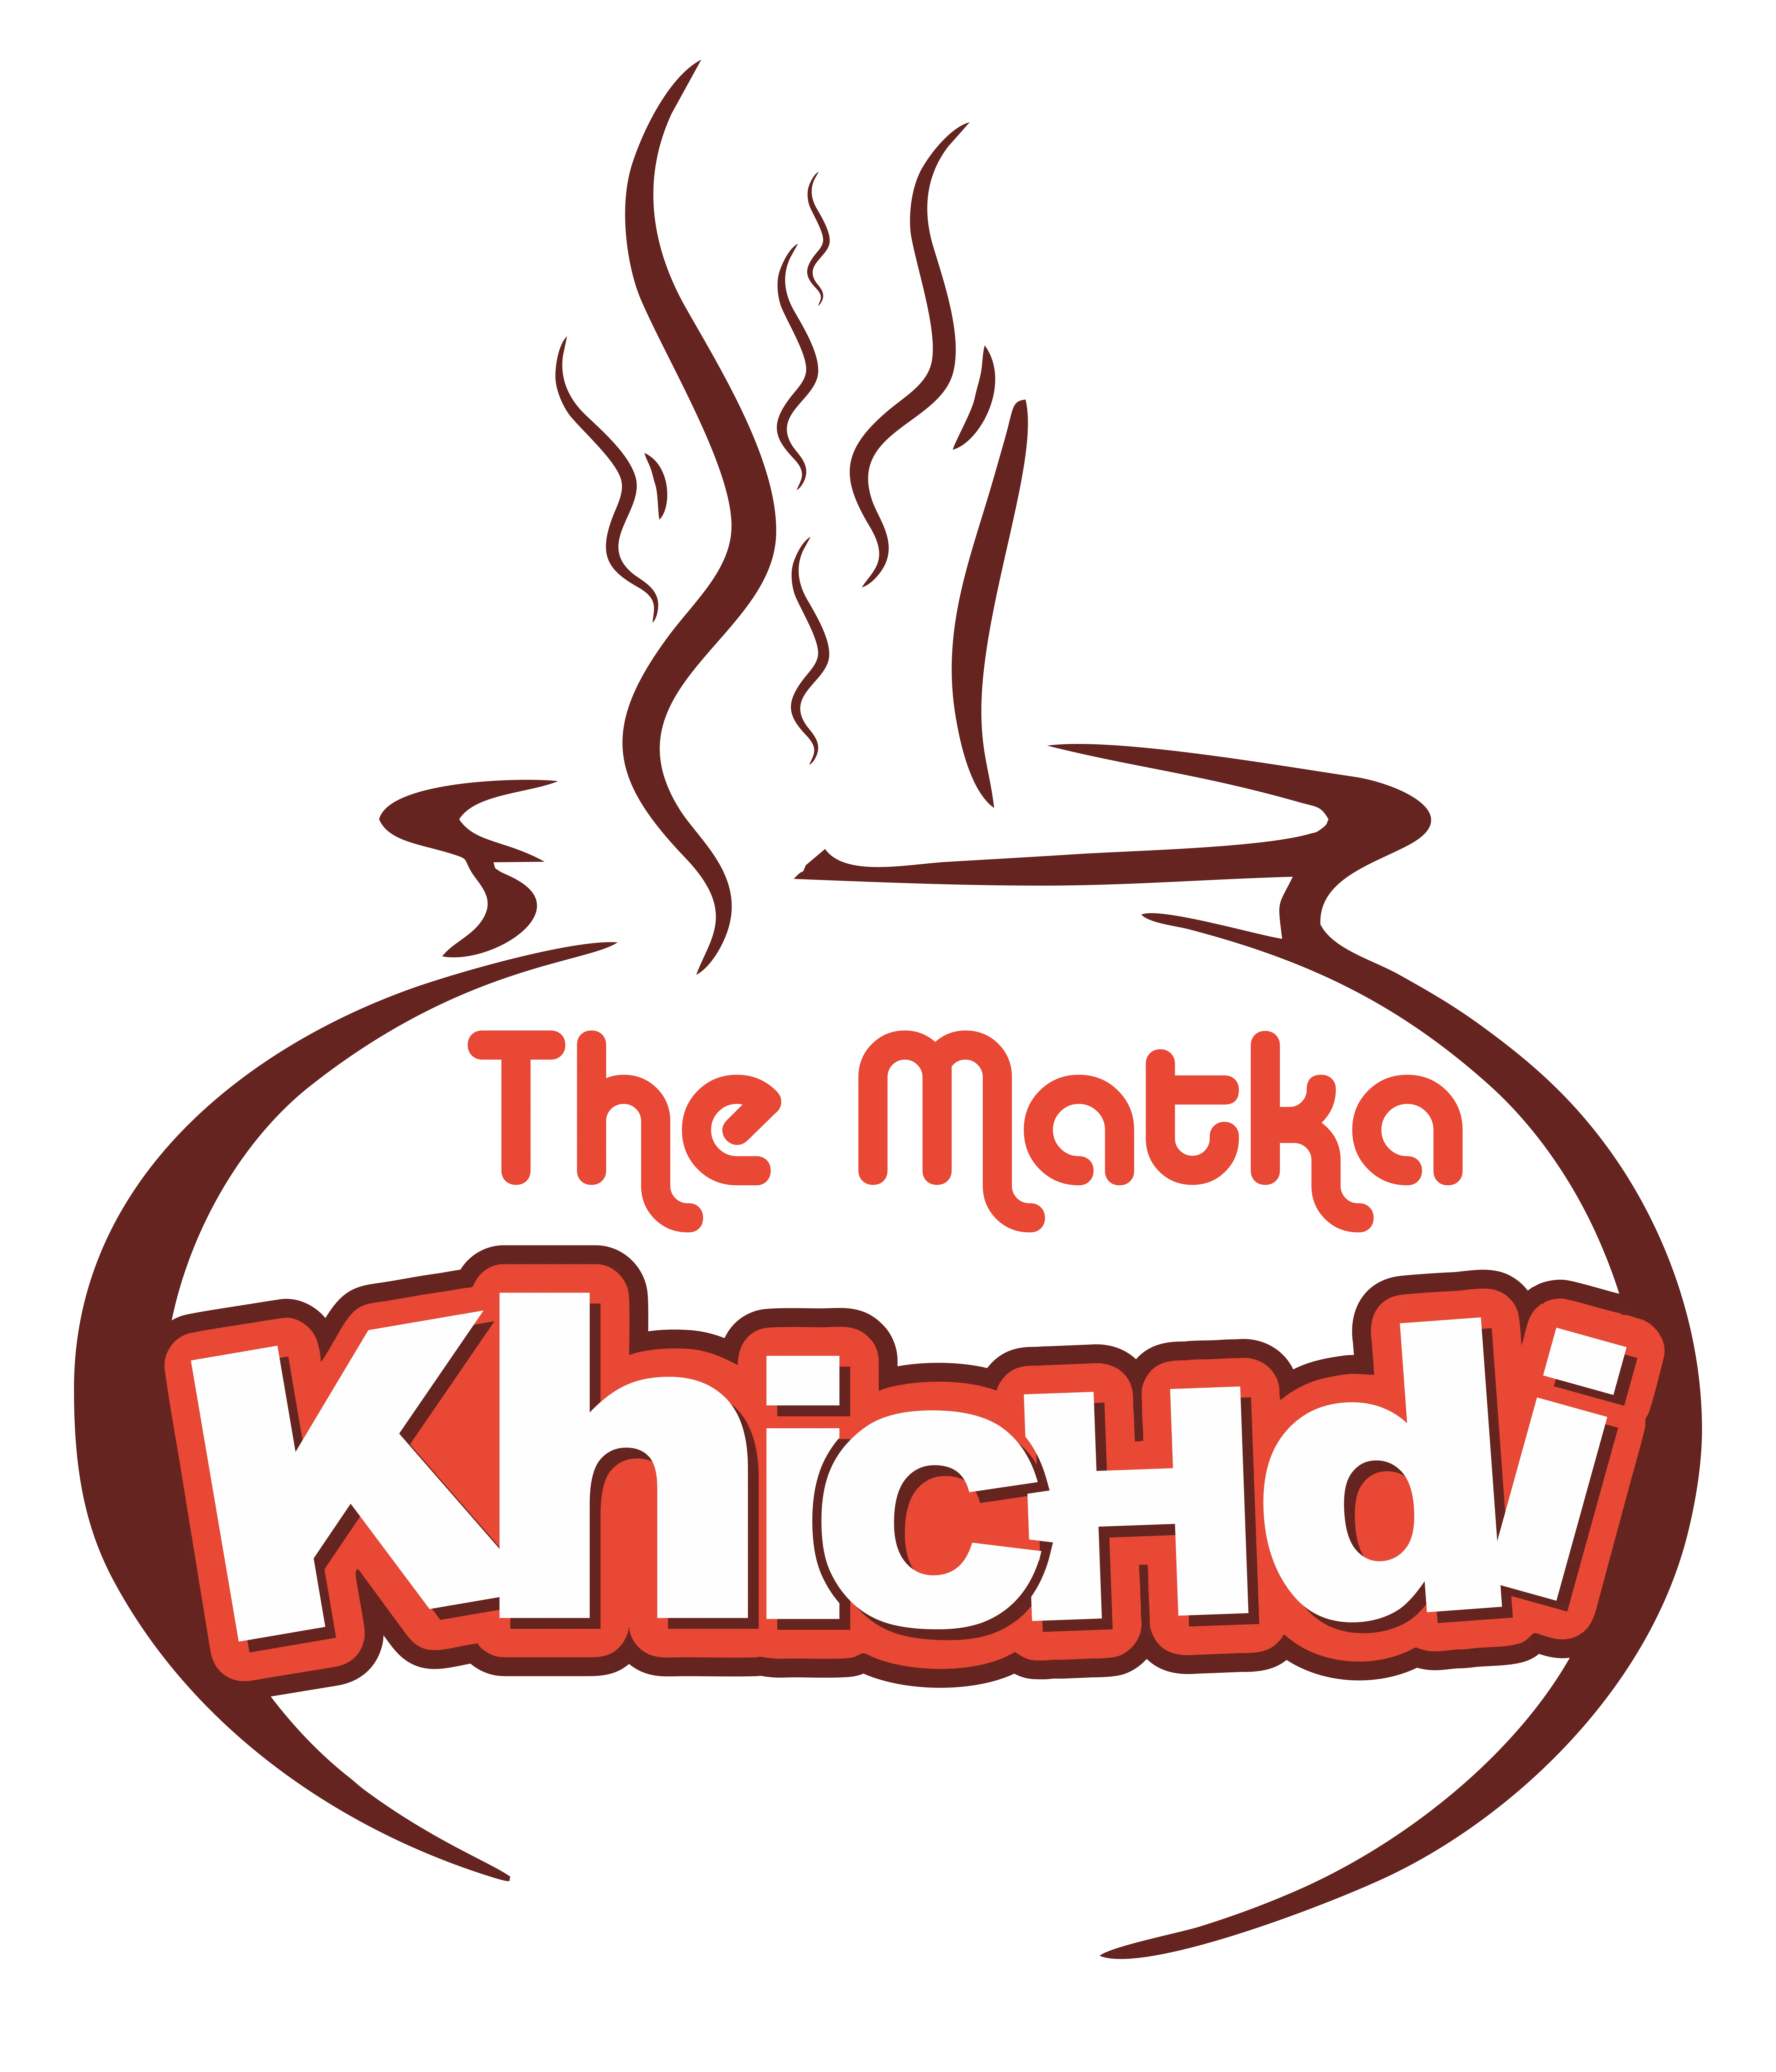 THE MATKA KHICHDI